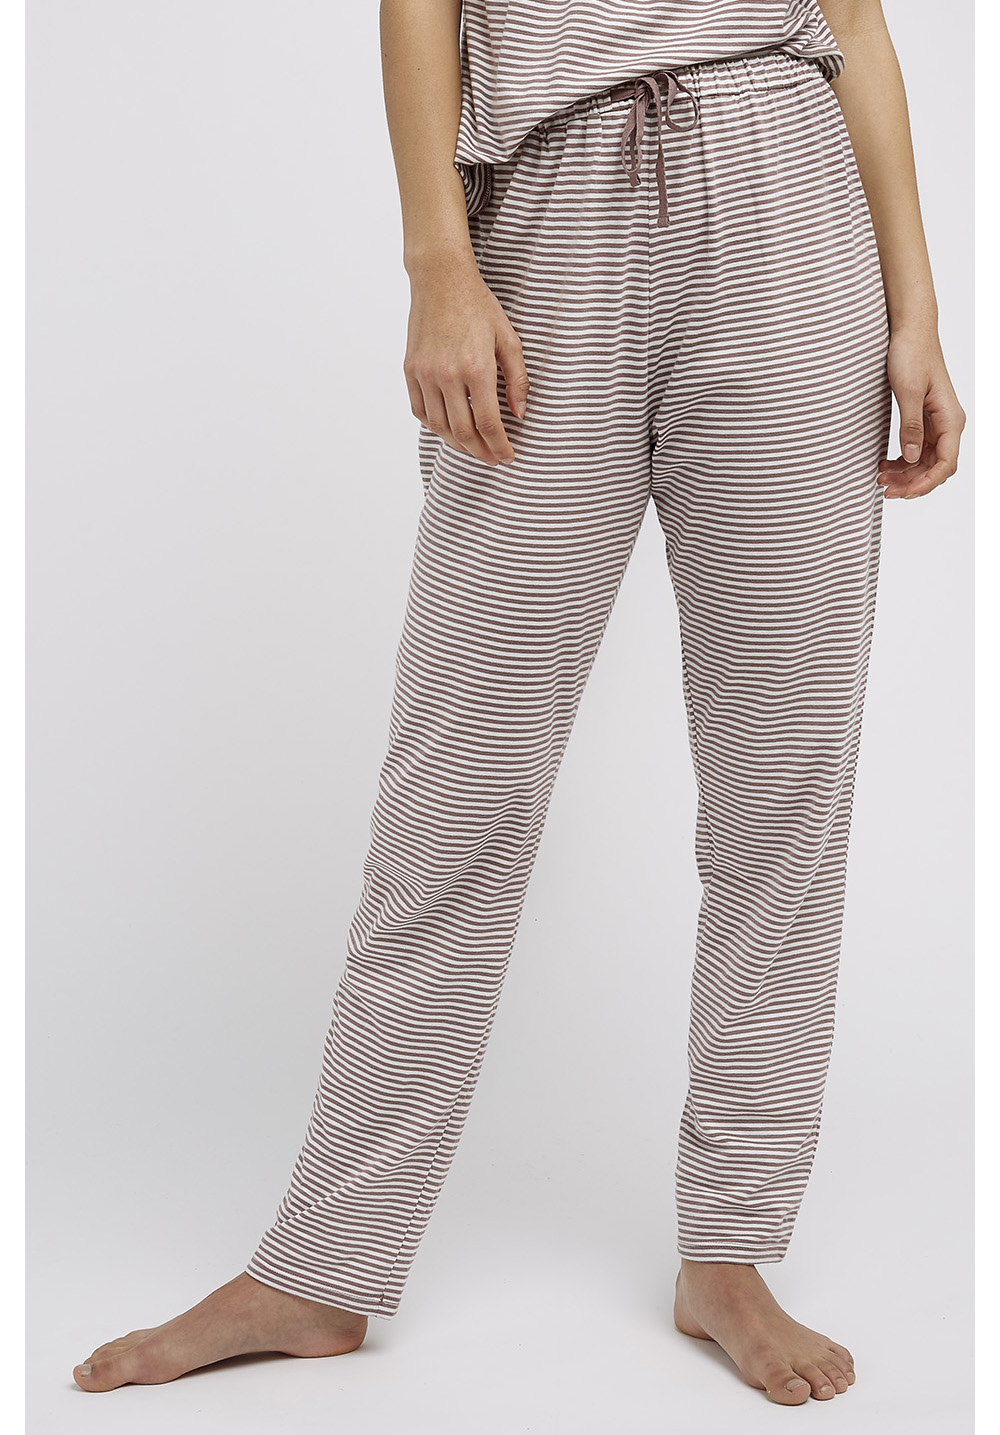 stripe-pyjama-trousers-in-beige-c328828c79ab201.jpg